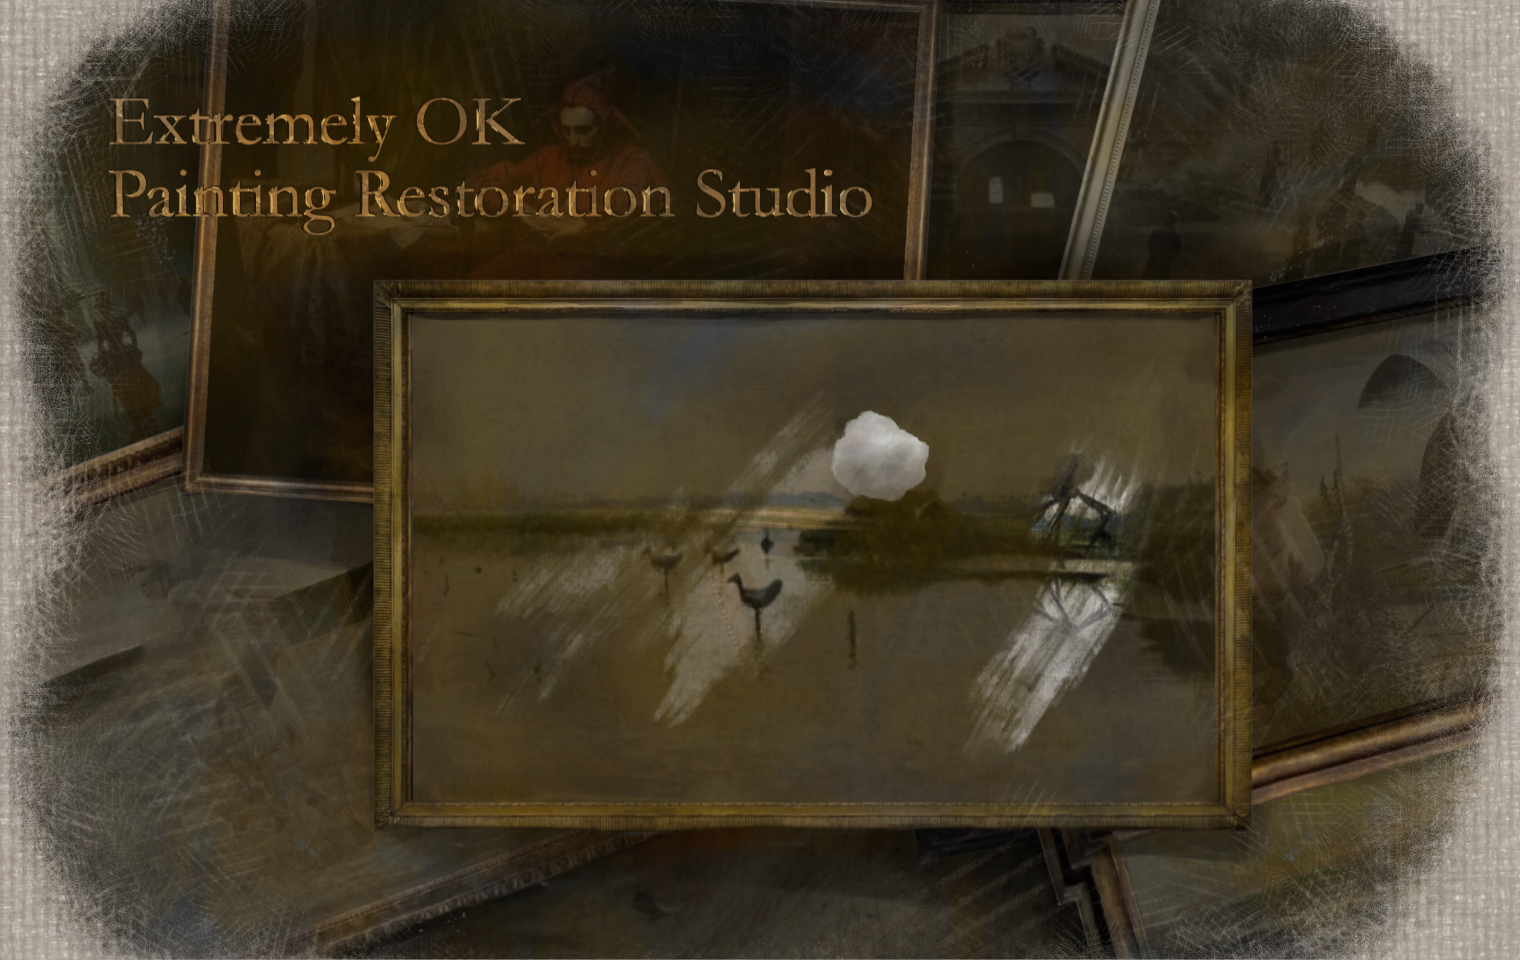 Extremely OK Painting Restoration Studio